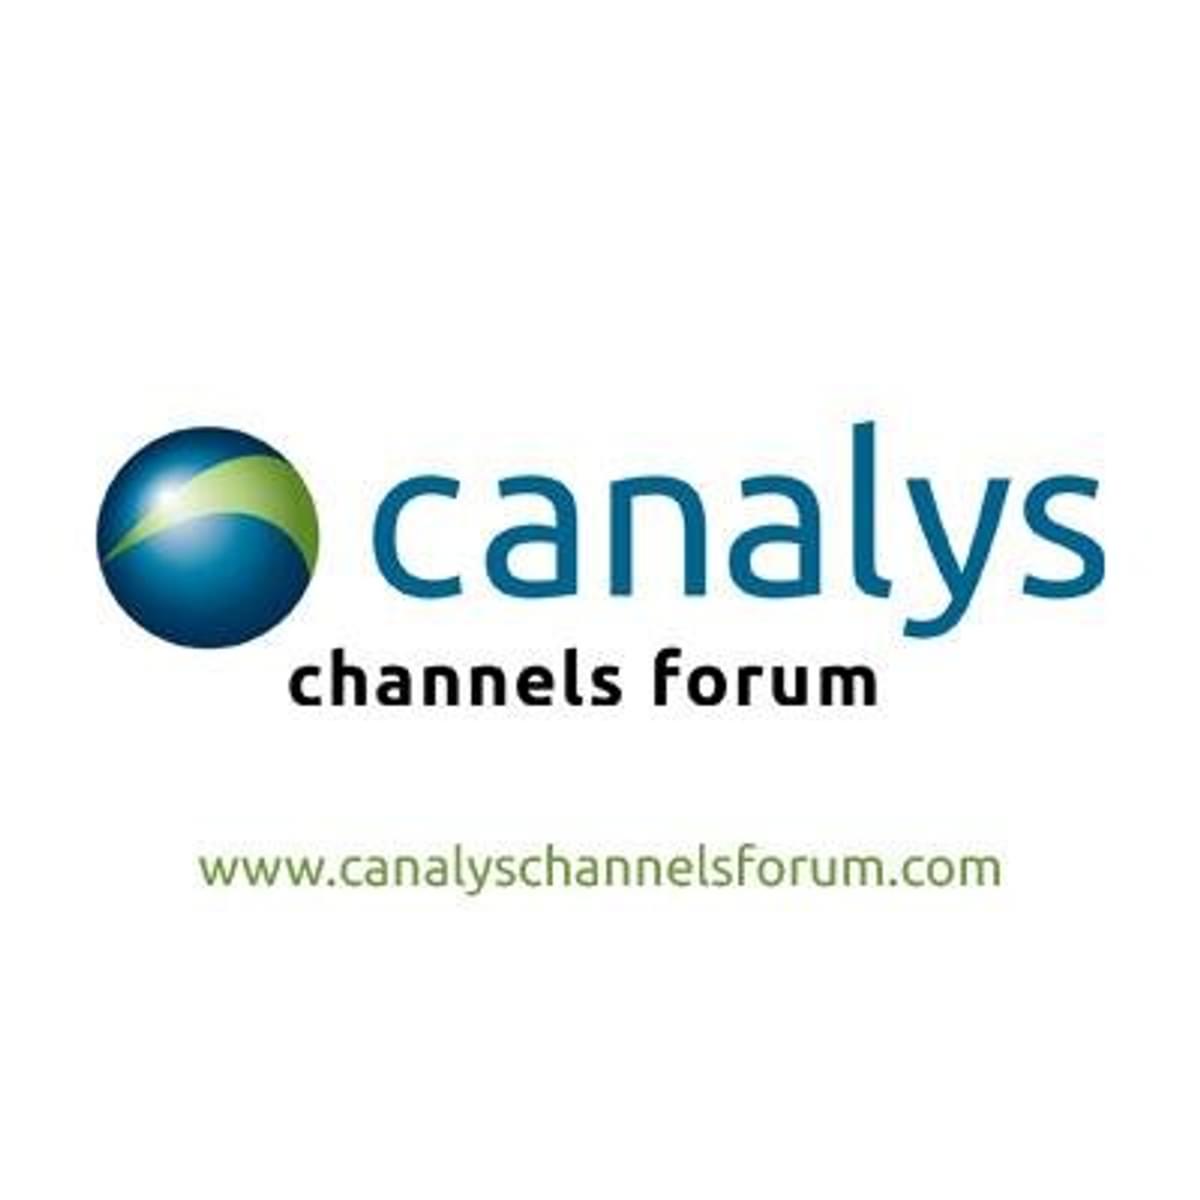 Canalys Channels Forum 2019 EMEA Barcelona image